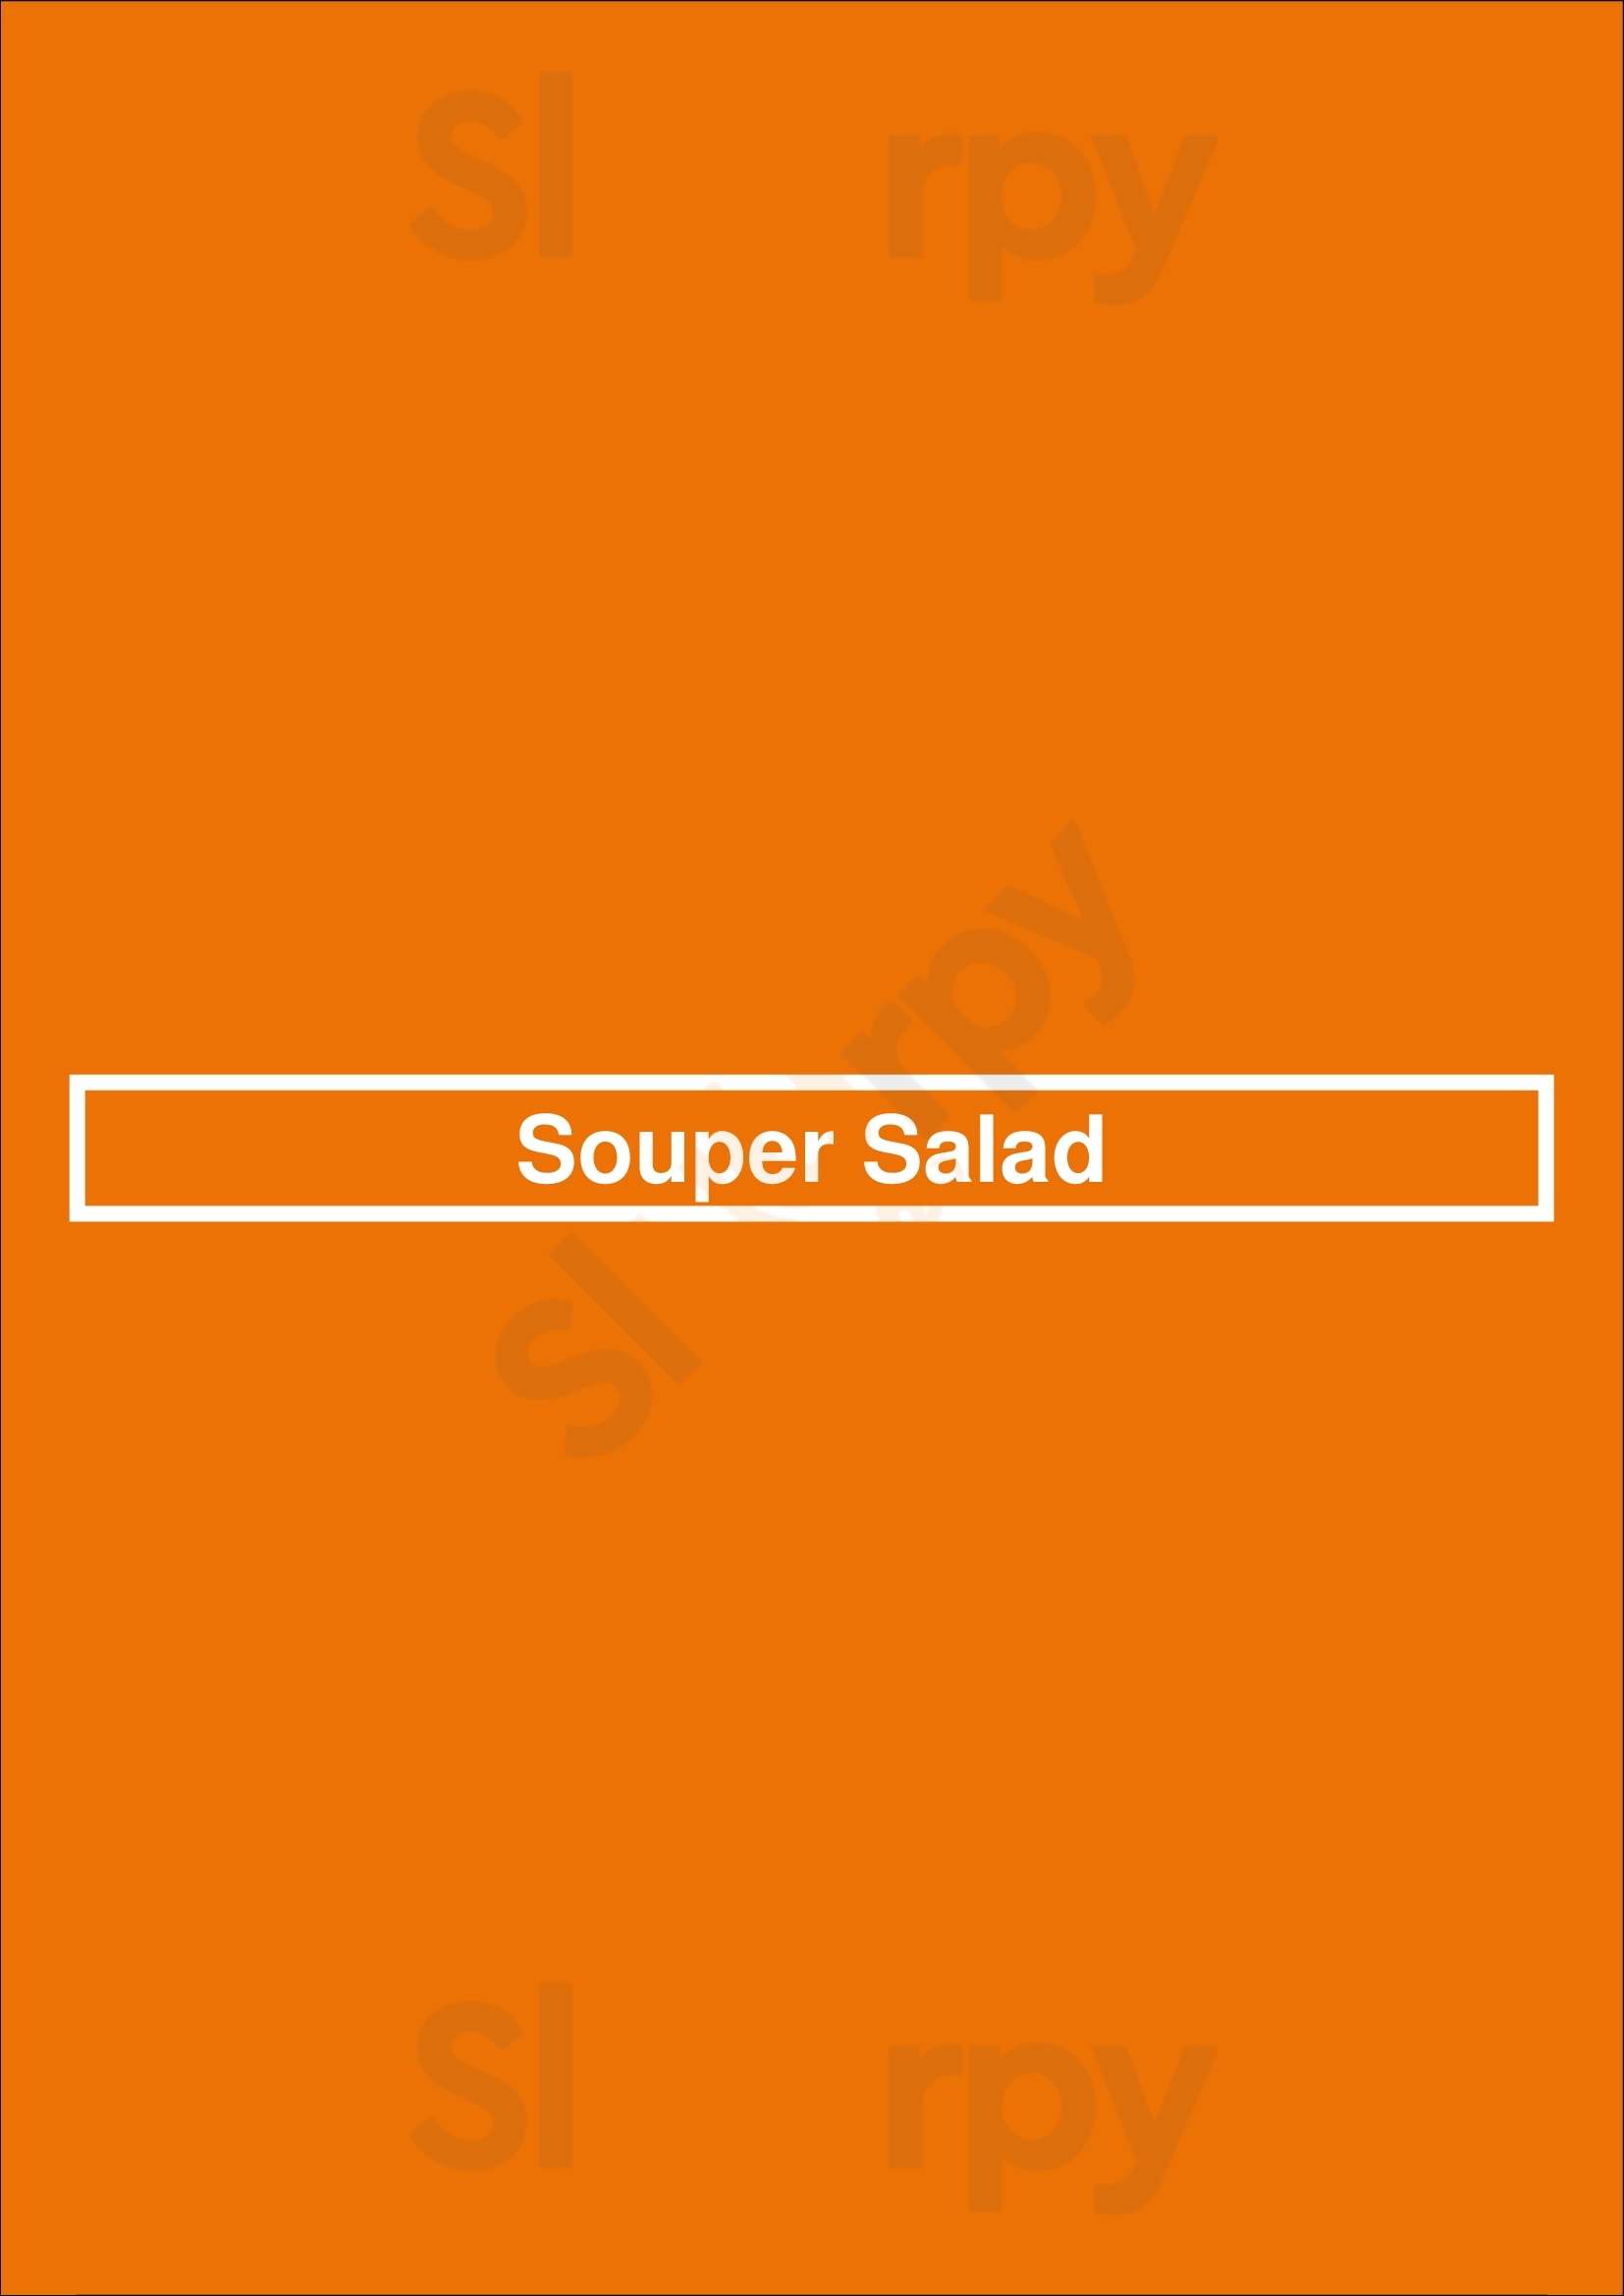 Souper Salad Austin Menu - 1